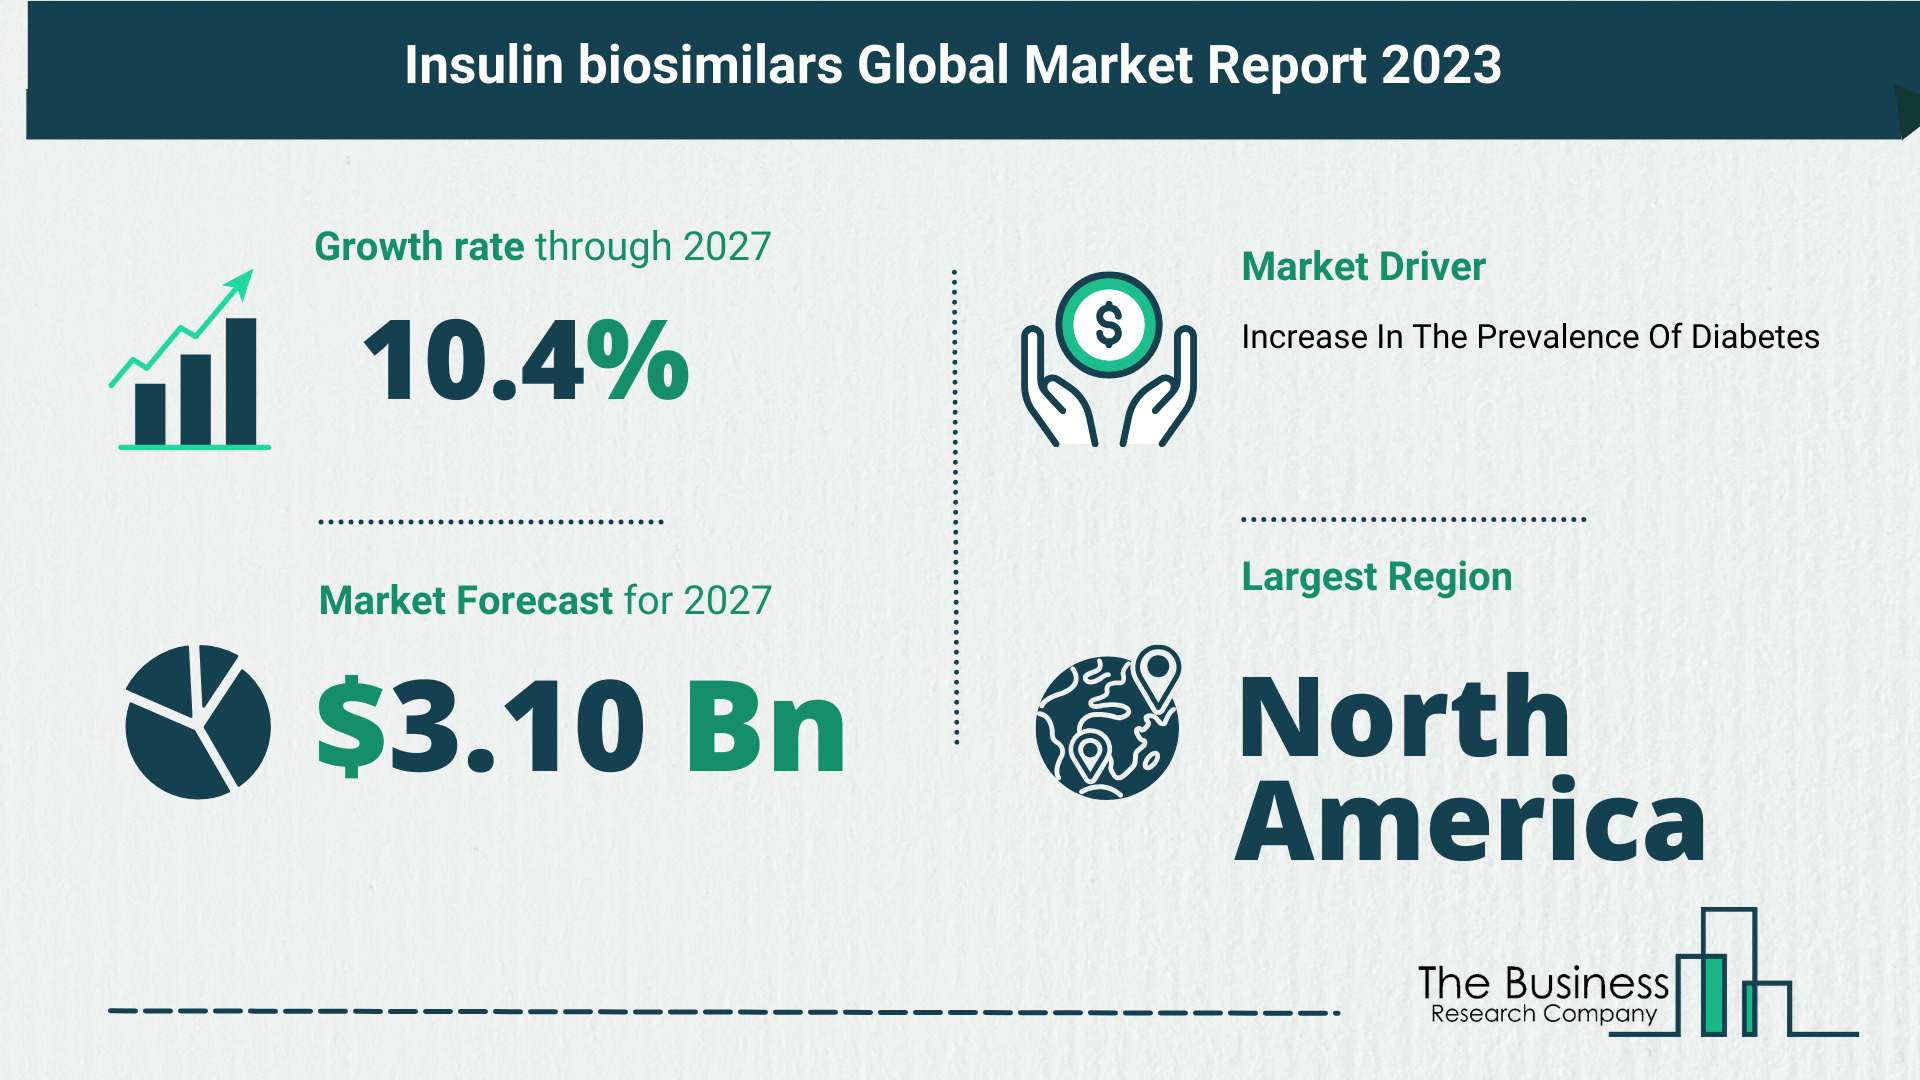 Global Insulin biosimilars Market Size